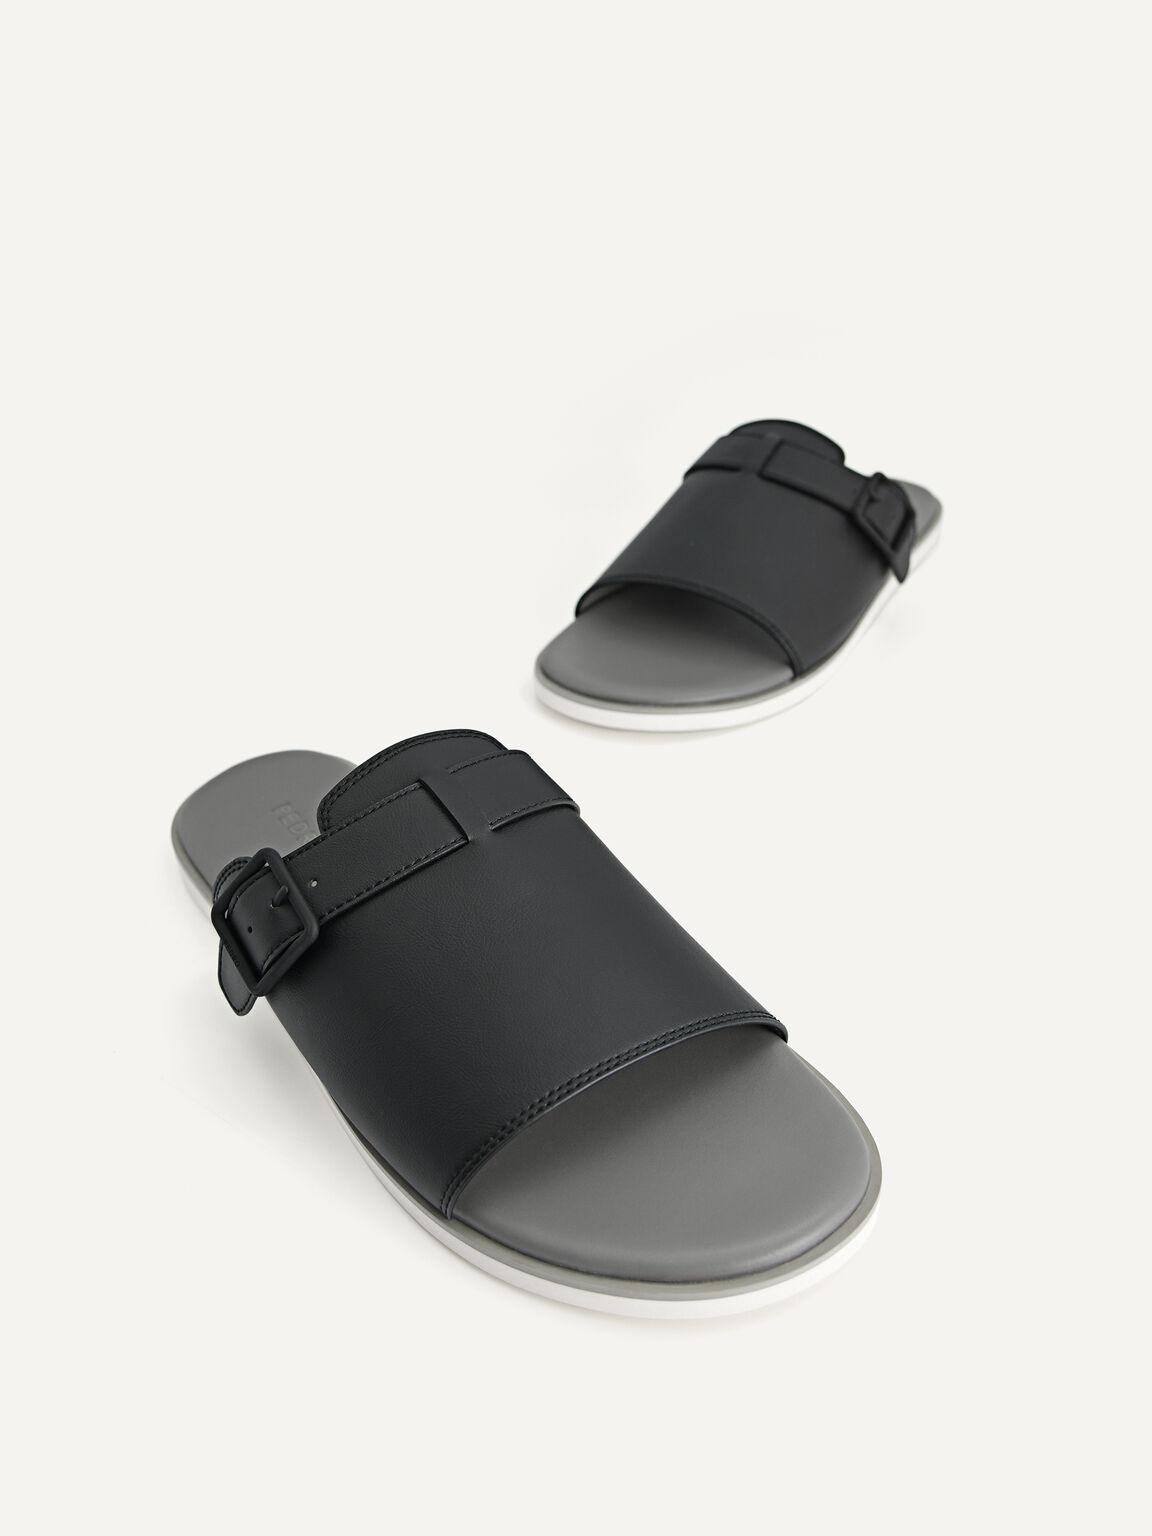 Monochrome Slide Sandals, Black